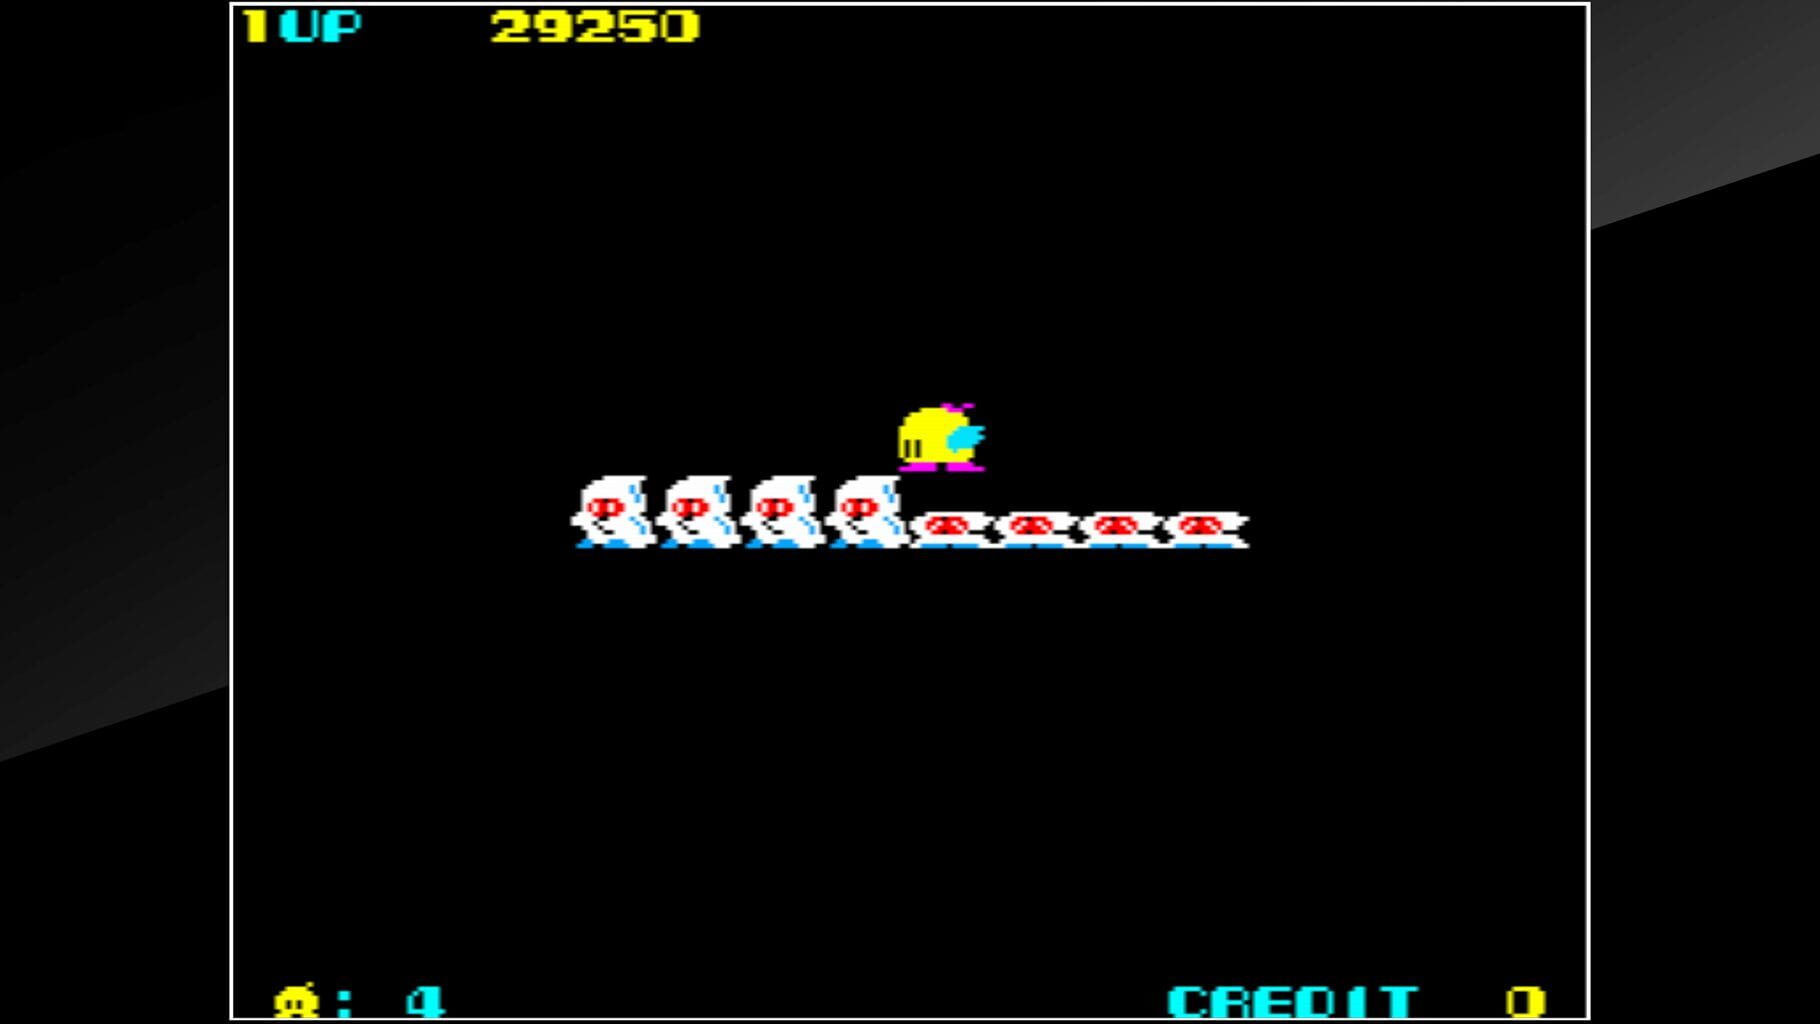 Arcade Archives: Chack'n Pop screenshot